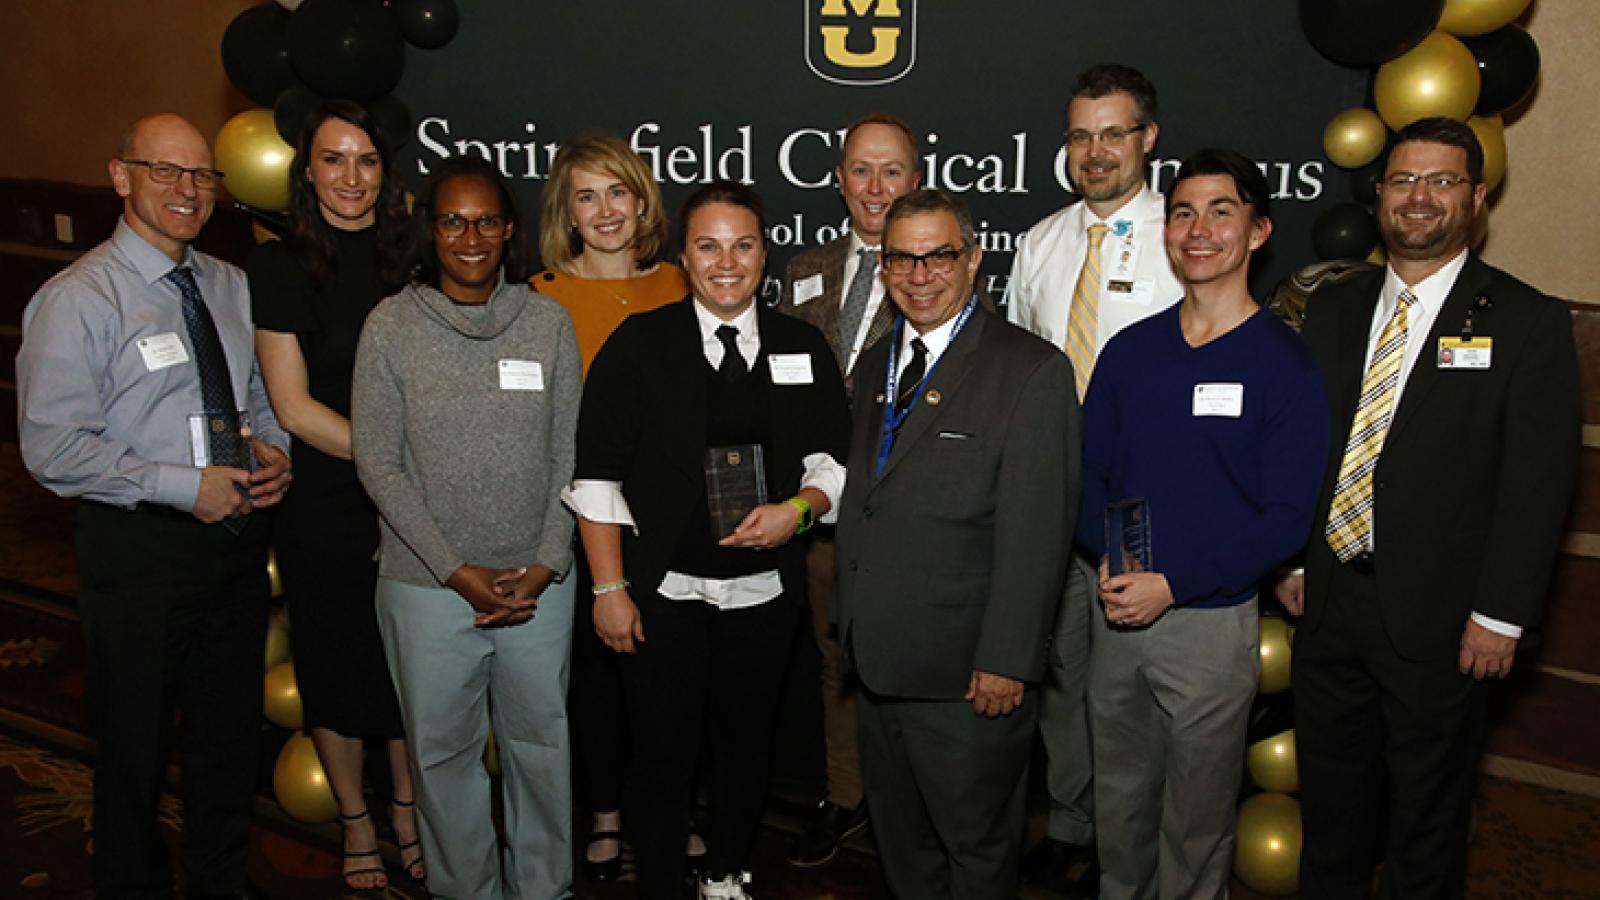 Springfield Clinical Campus Faculty Appreciation Dinner award winners